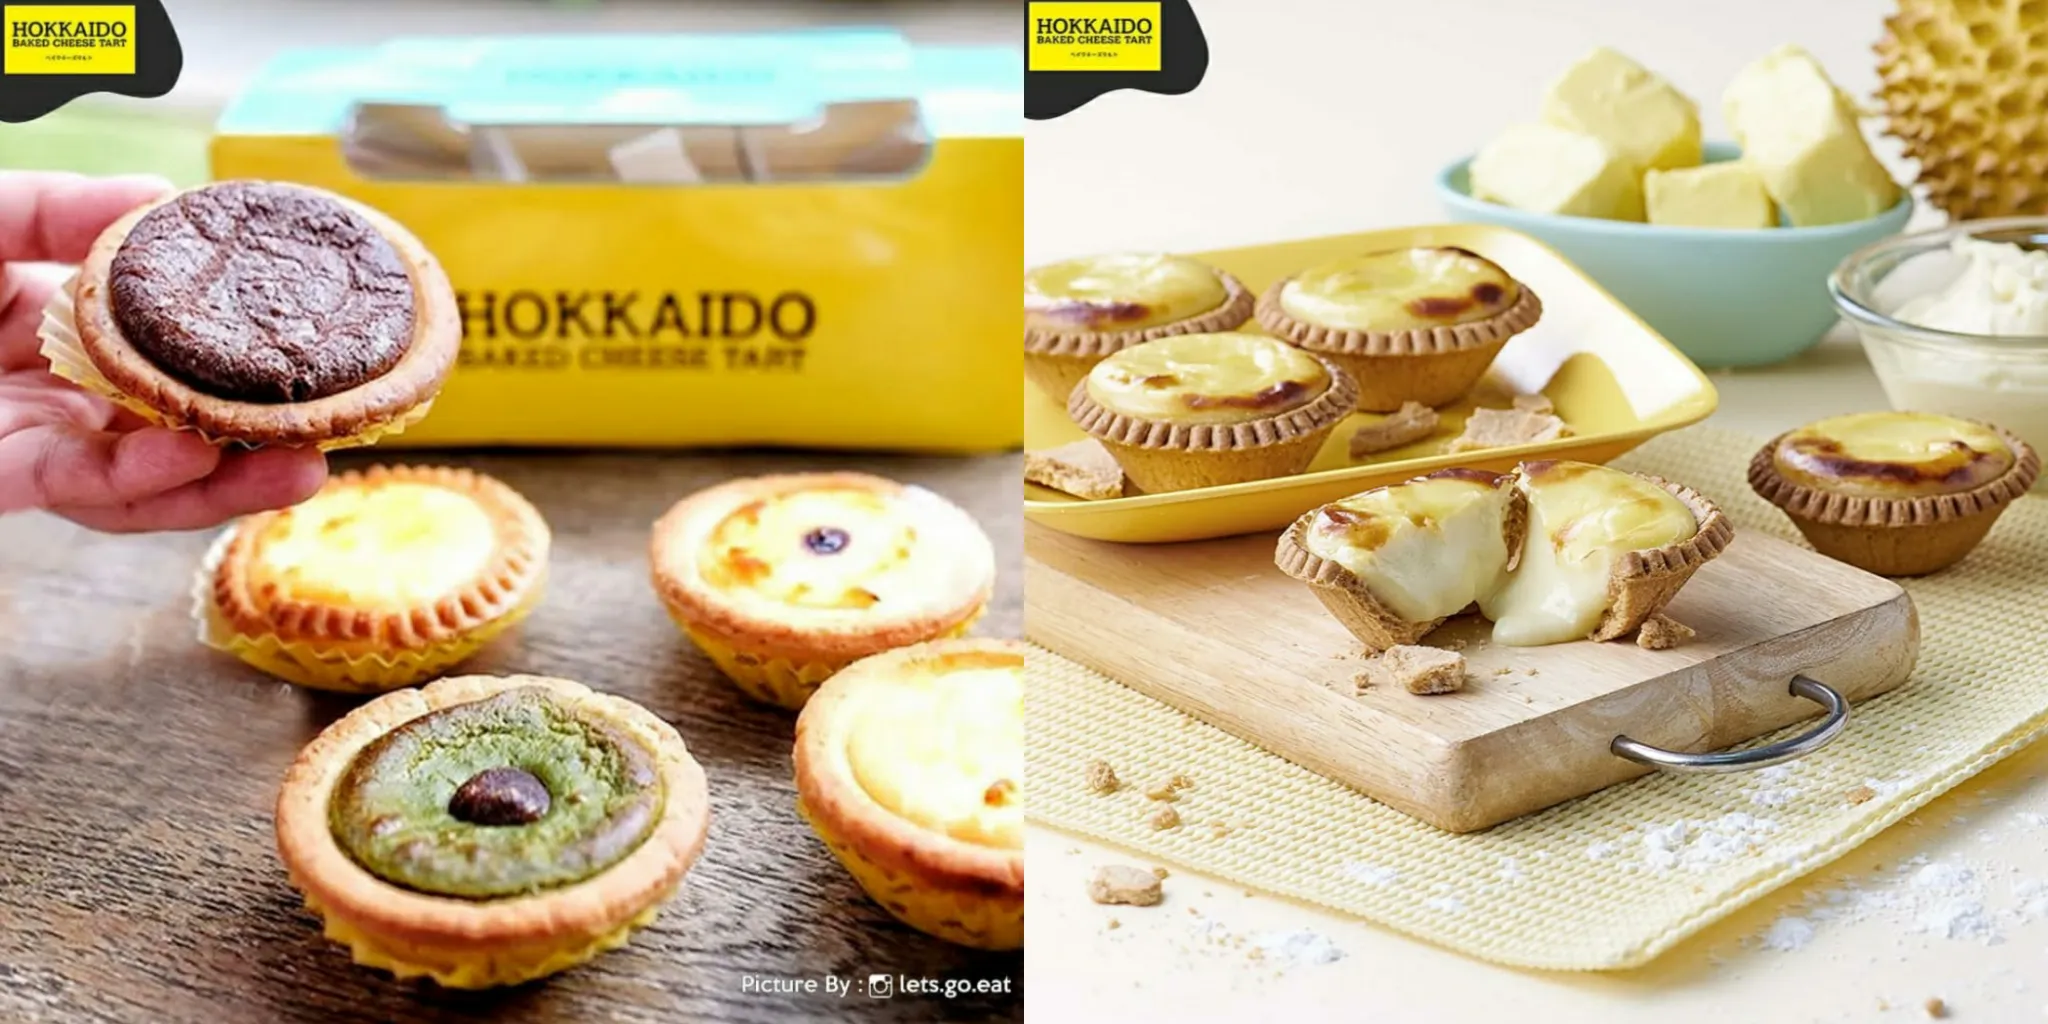 18. Hokkaido baked cheese tart